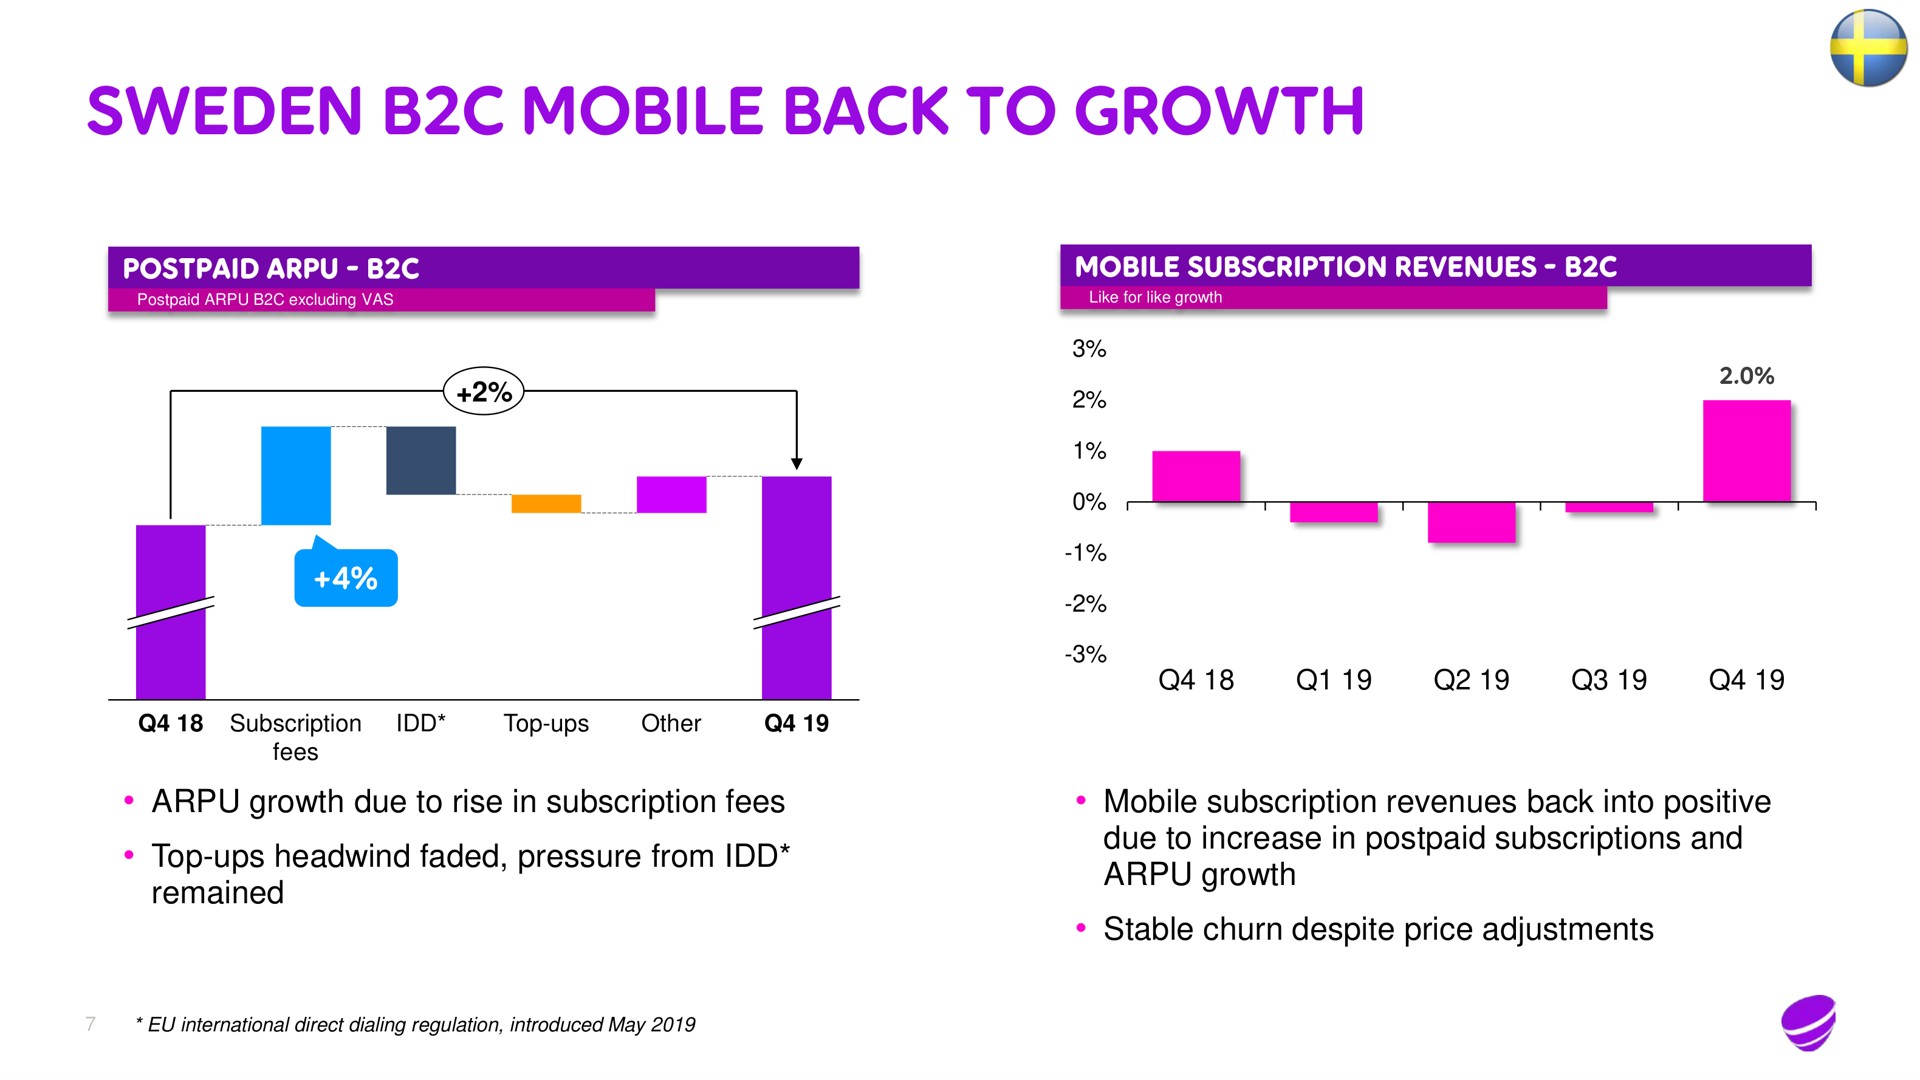 mobile back to growth | Telia Company